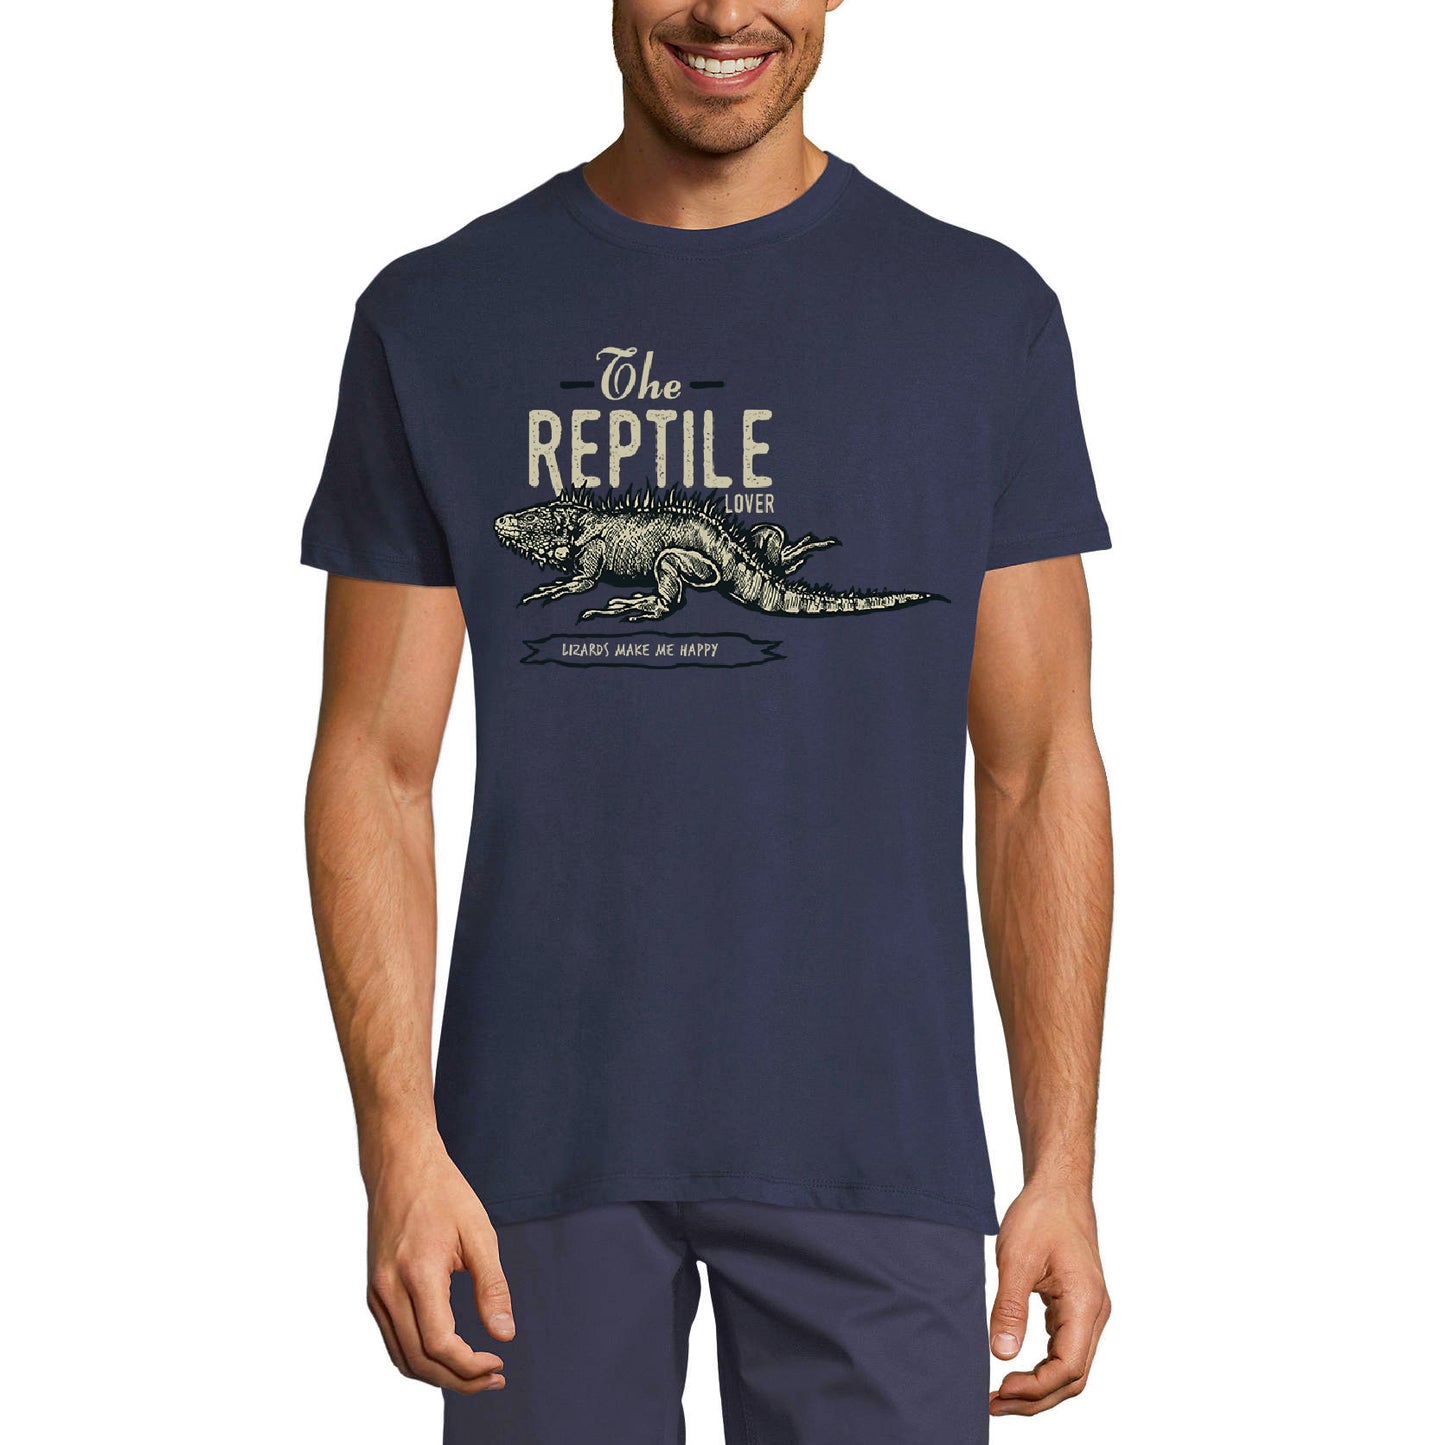 ULTRABASIC Men's T-Shirt Reptile Lover - Lizards Make Me Happy Animal Shirt